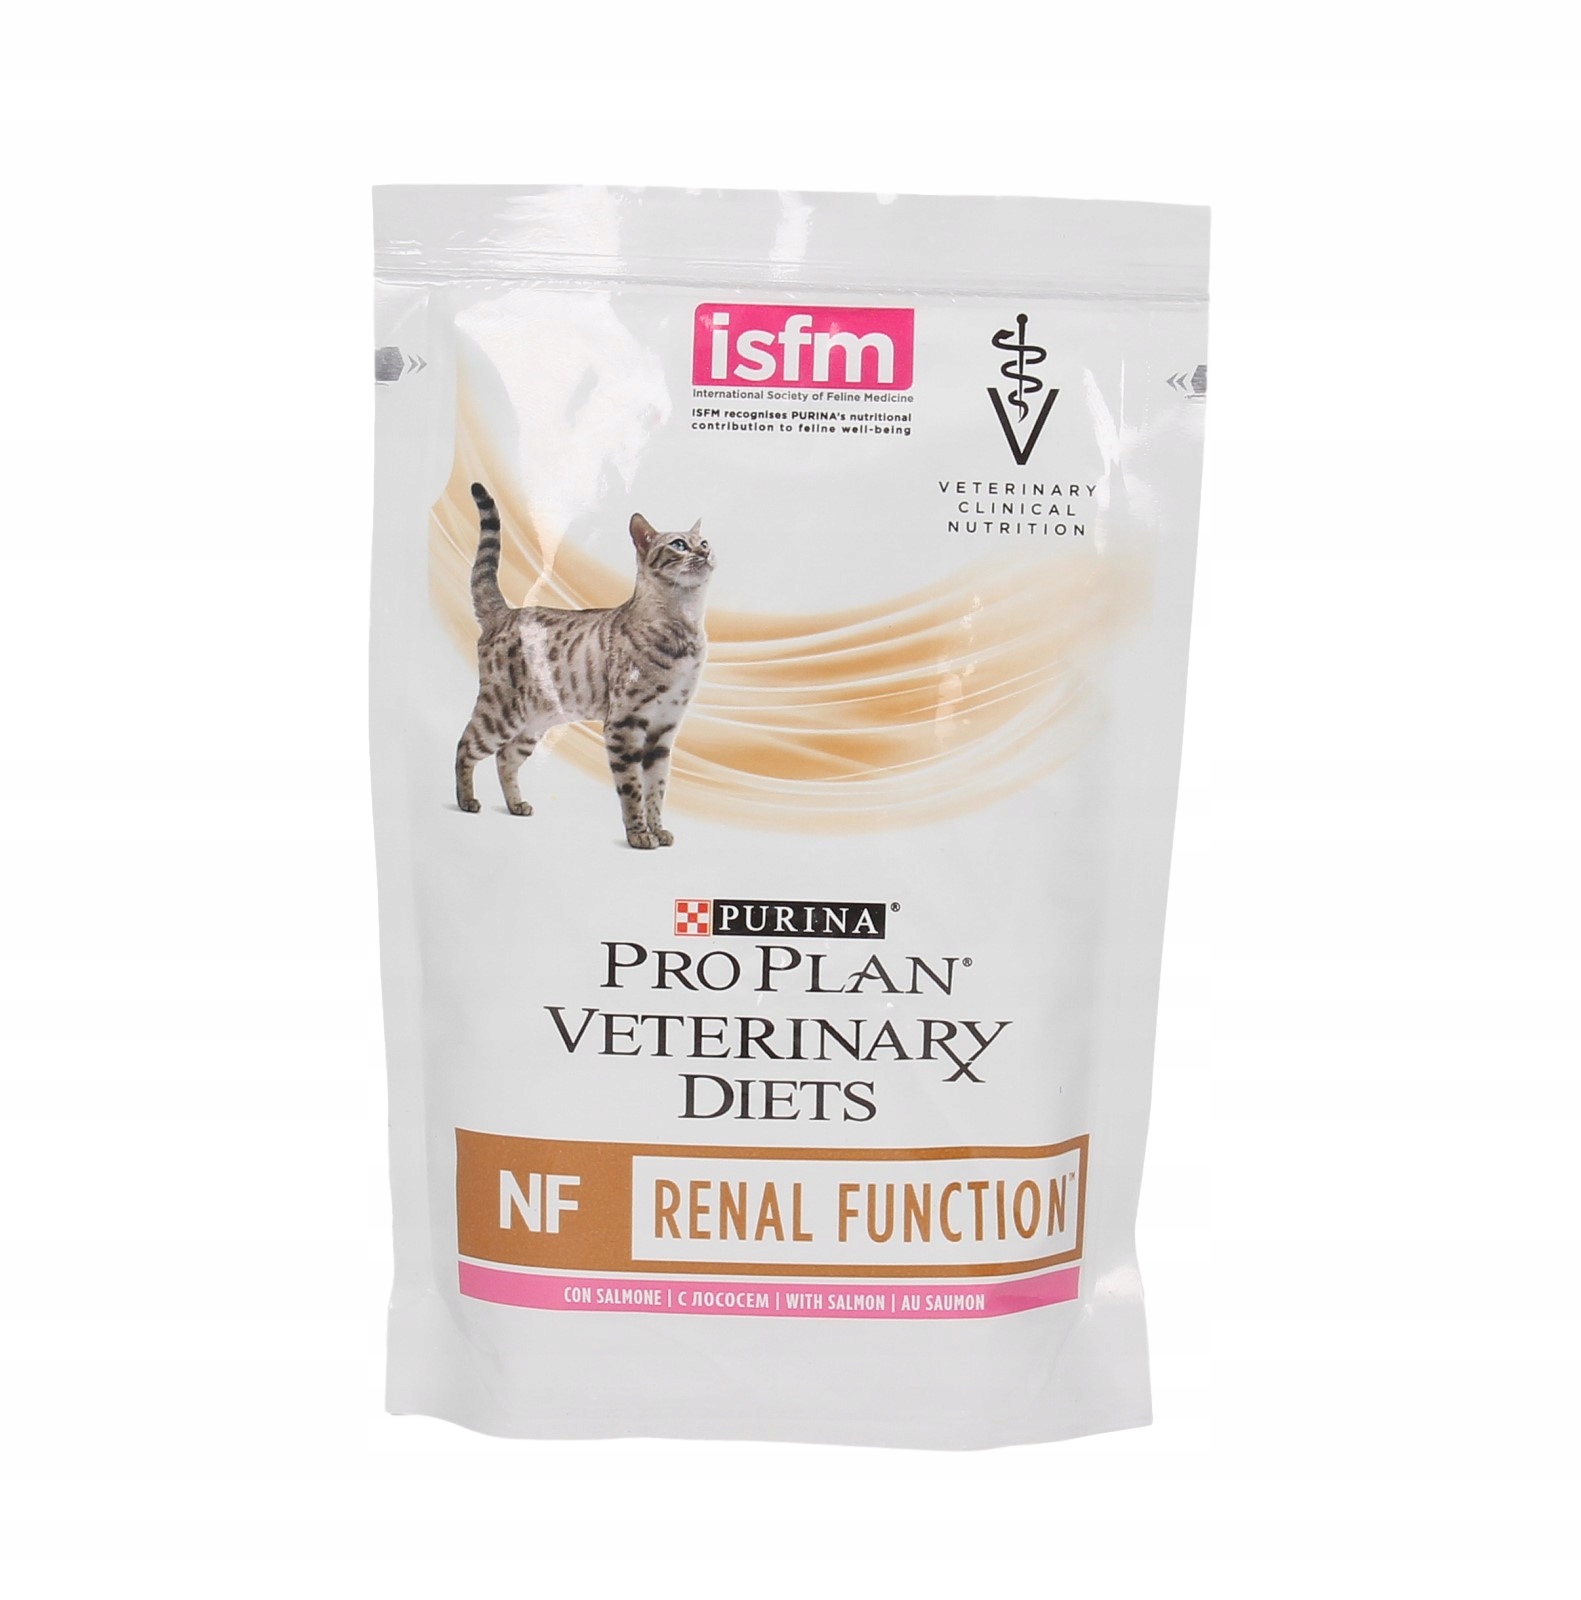 Проплан ренал для кошек купить. Renal Purina Pro Plan для кошек Veterinary Diets. Pro Plan renal пауч. NF renal function корм для кошек. Пурина корм для кошек renal function.